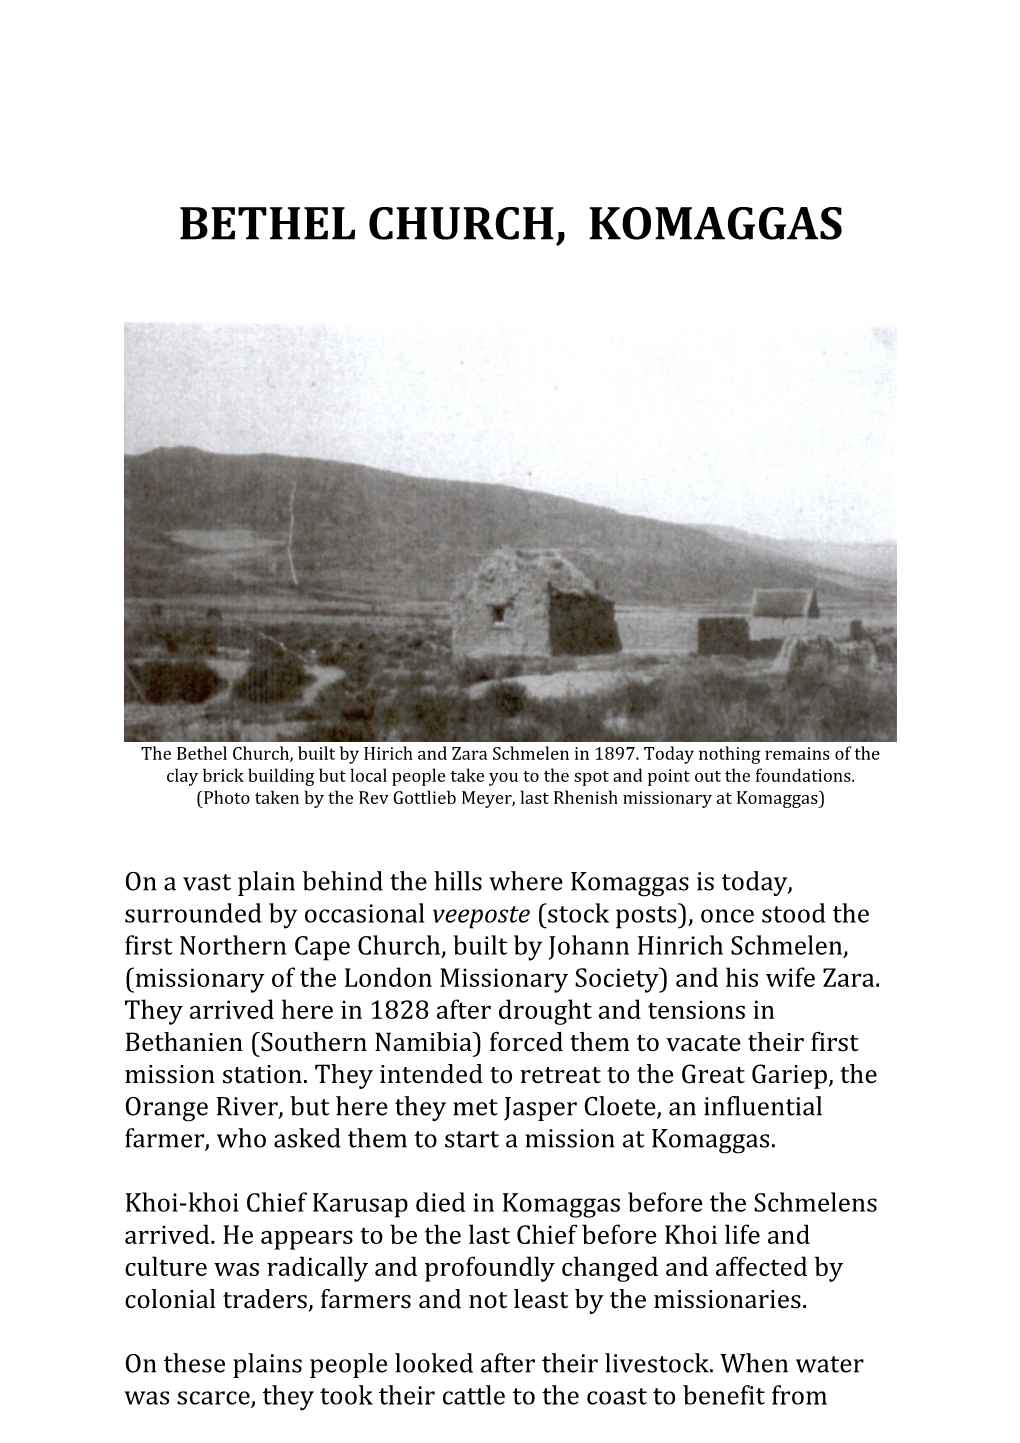 Bethel Church, Komaggas